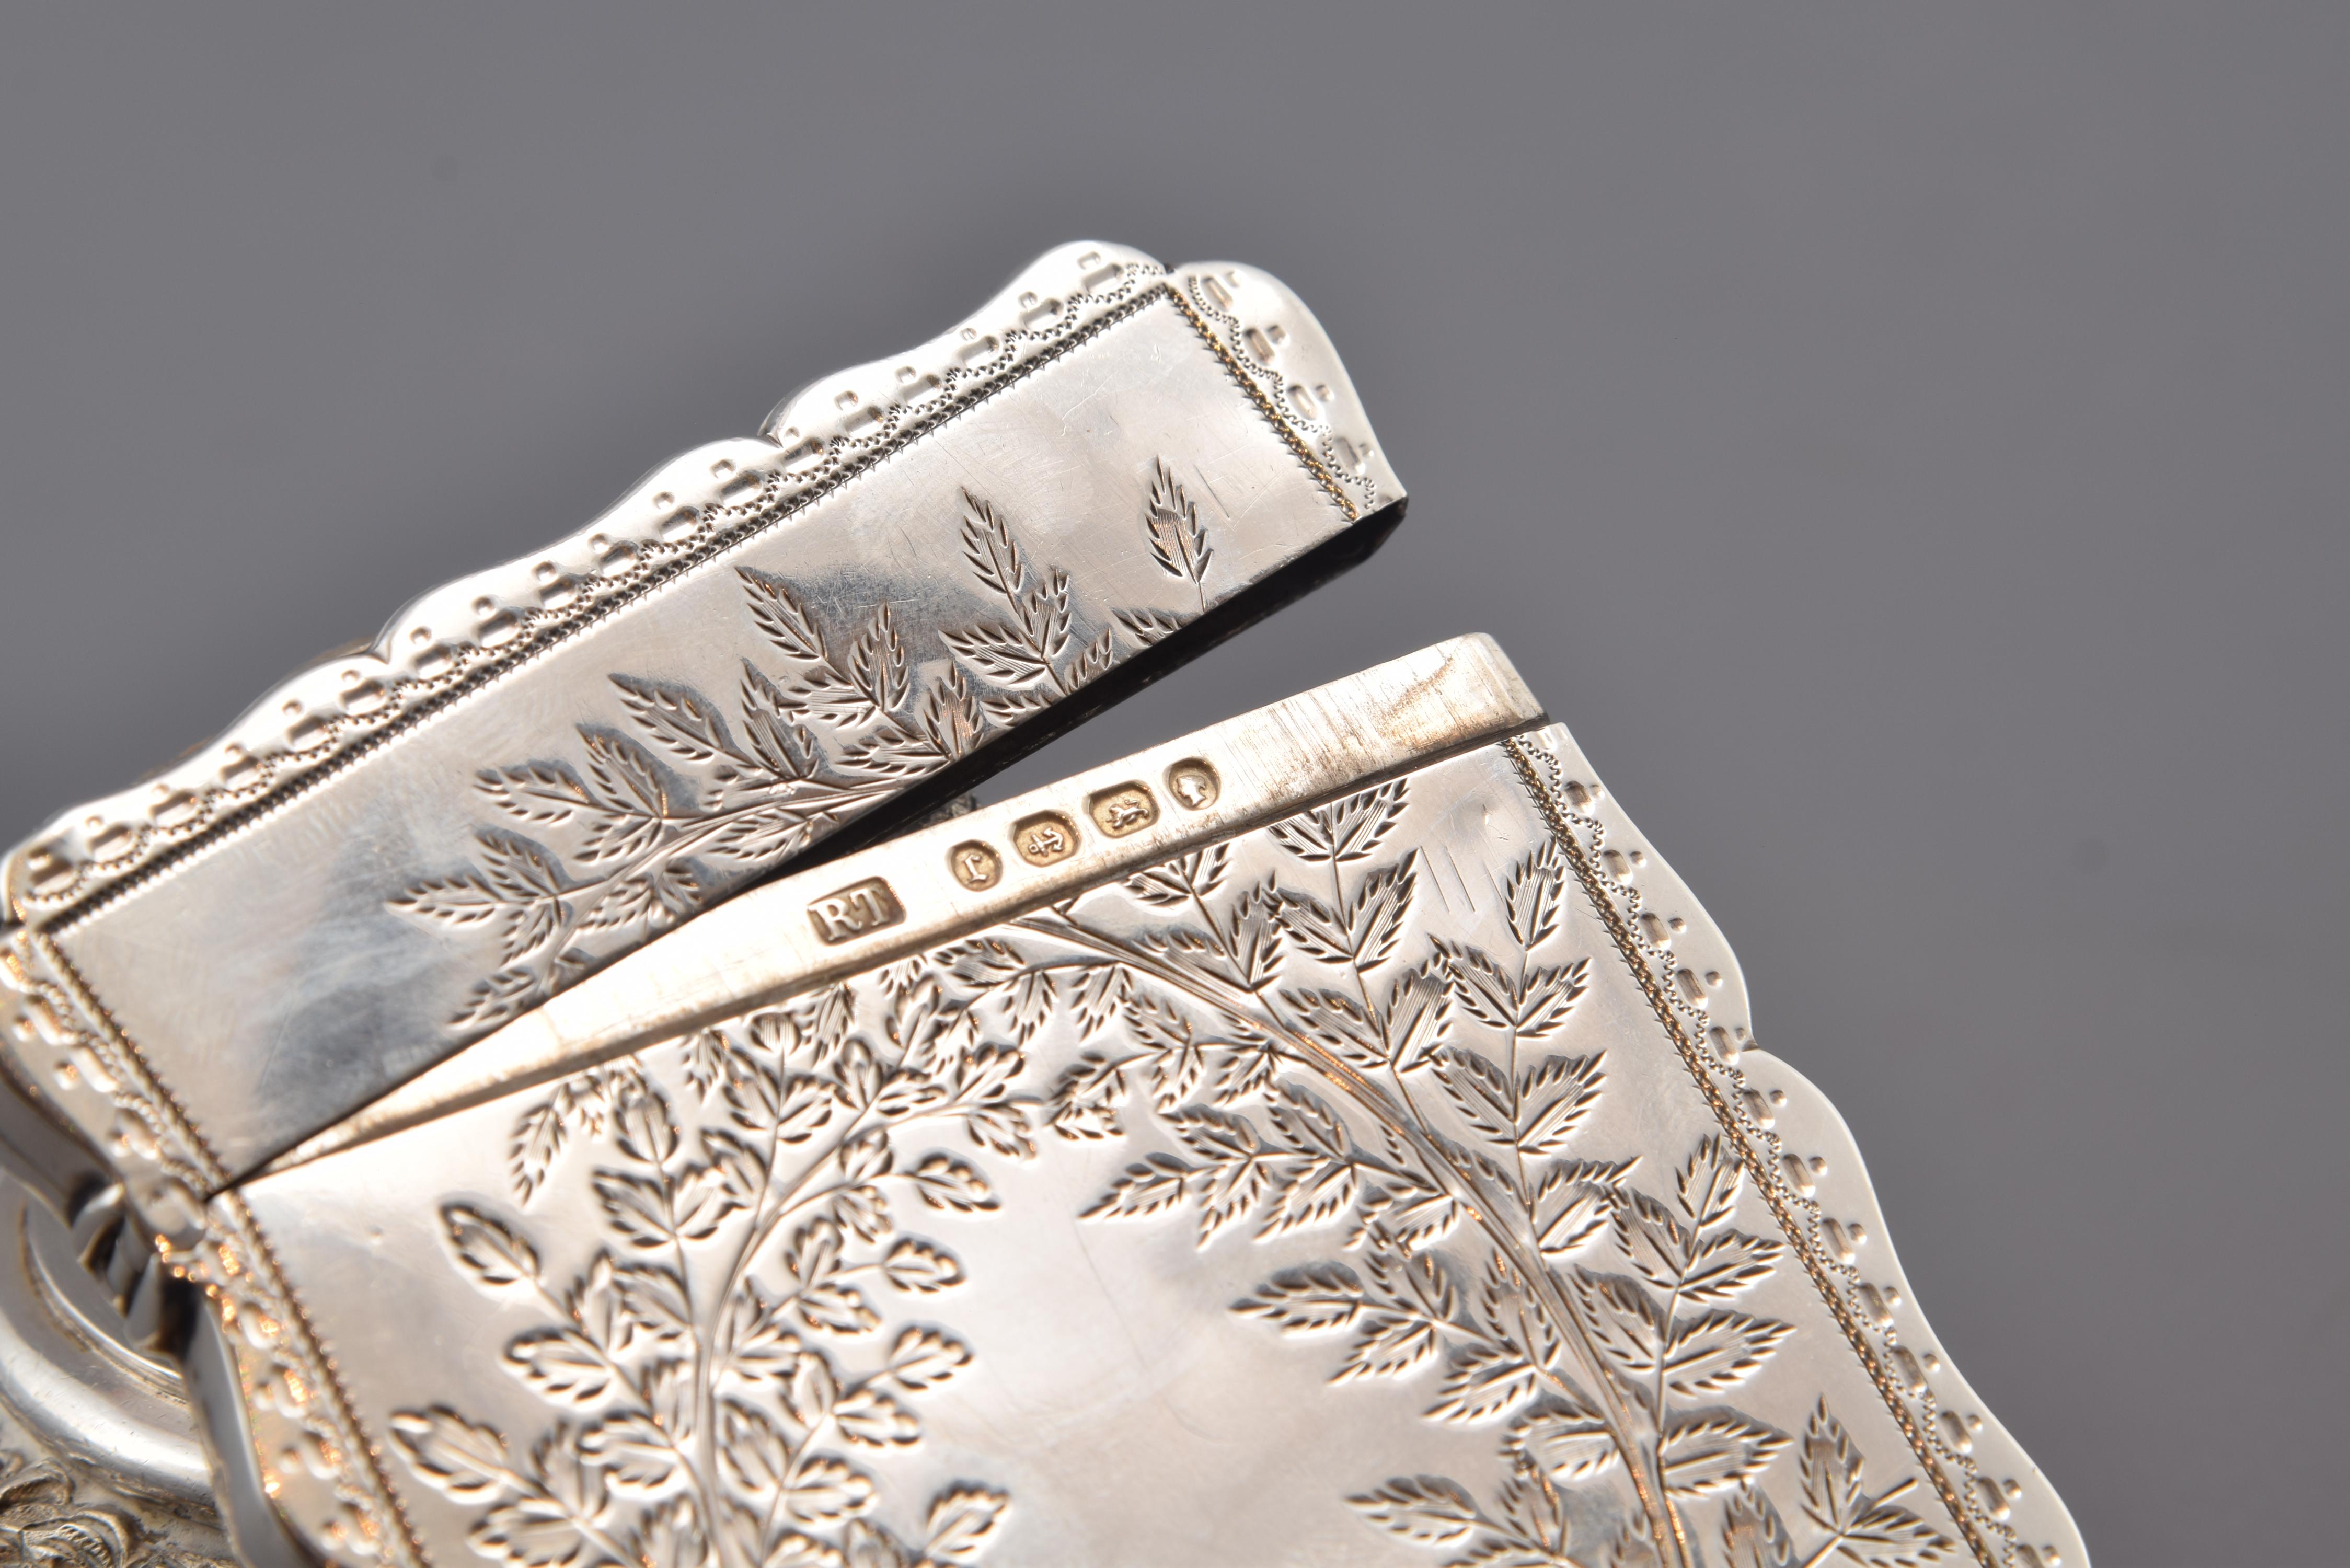 Late 19th Century Silver Card Case, with Hallmarks, Robert Thornton, Birmingham, England, 1877